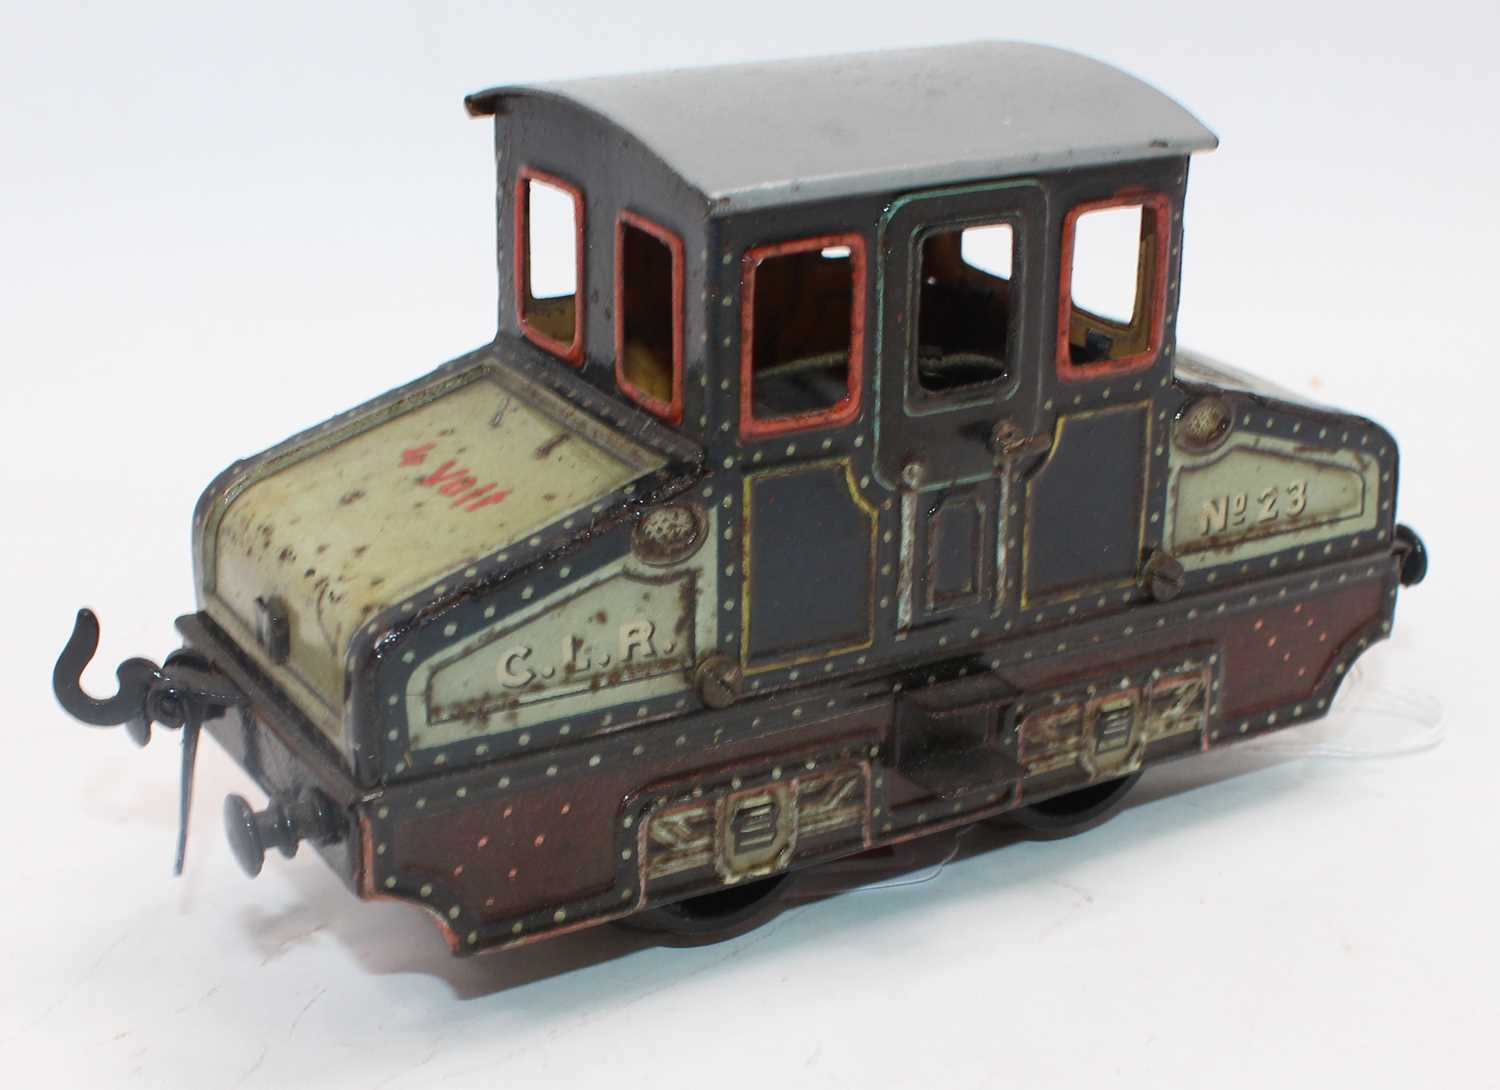 Circa 1905-10 '0' gauge Bing electric loco for CLR (Central London Railway) no. 23 4 volt electric